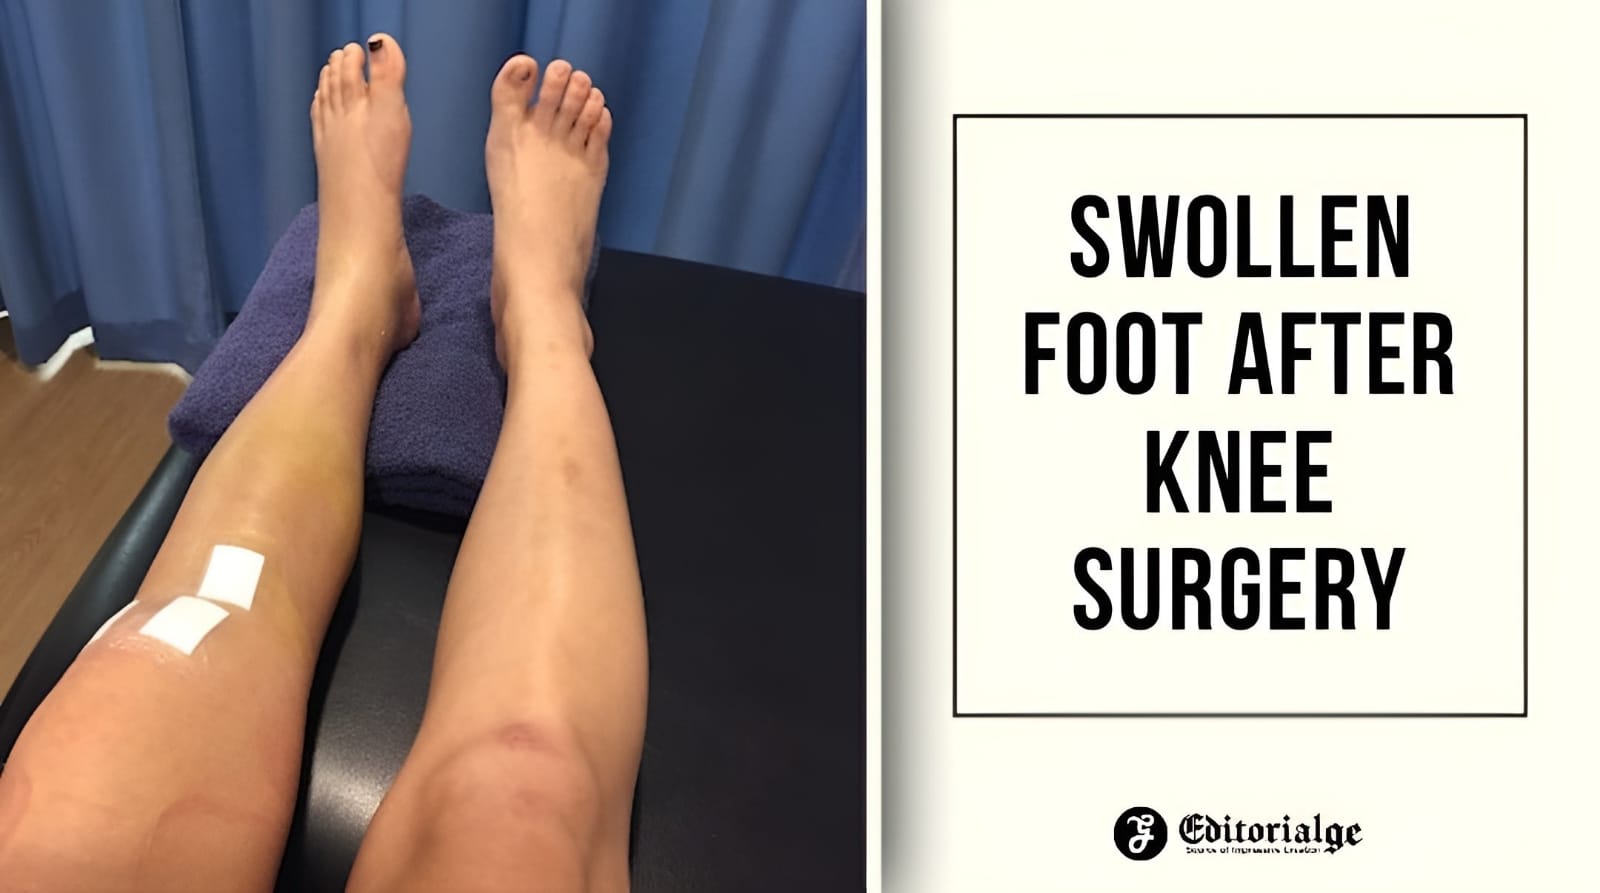 Swollen foot after knee surgery